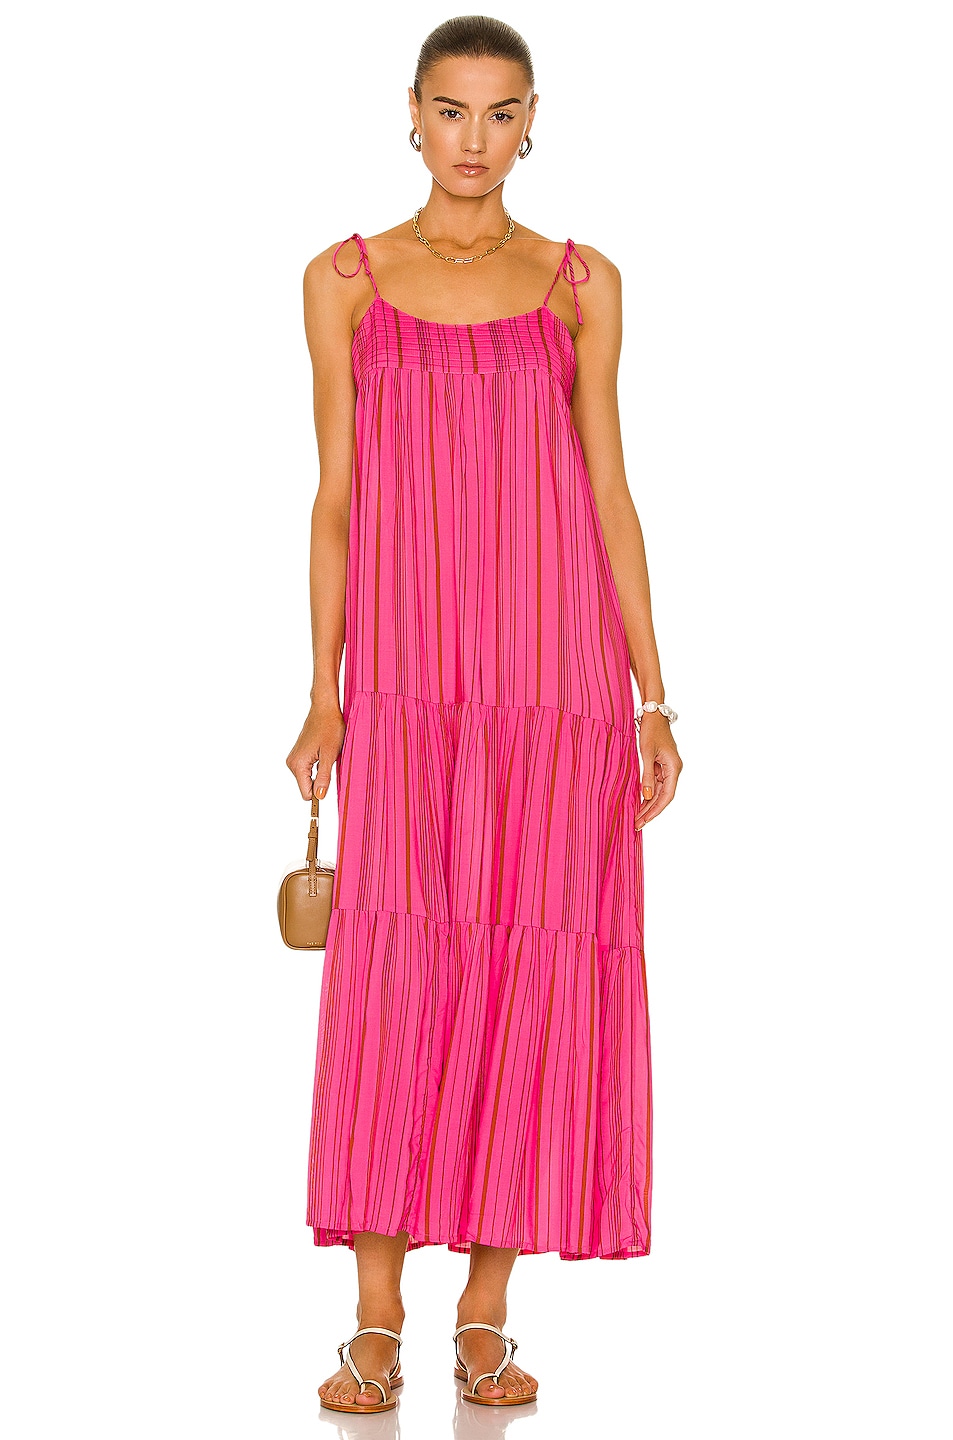 Image 1 of Natalie Martin Melanie Dress in Thin Stripe Puglia Pink